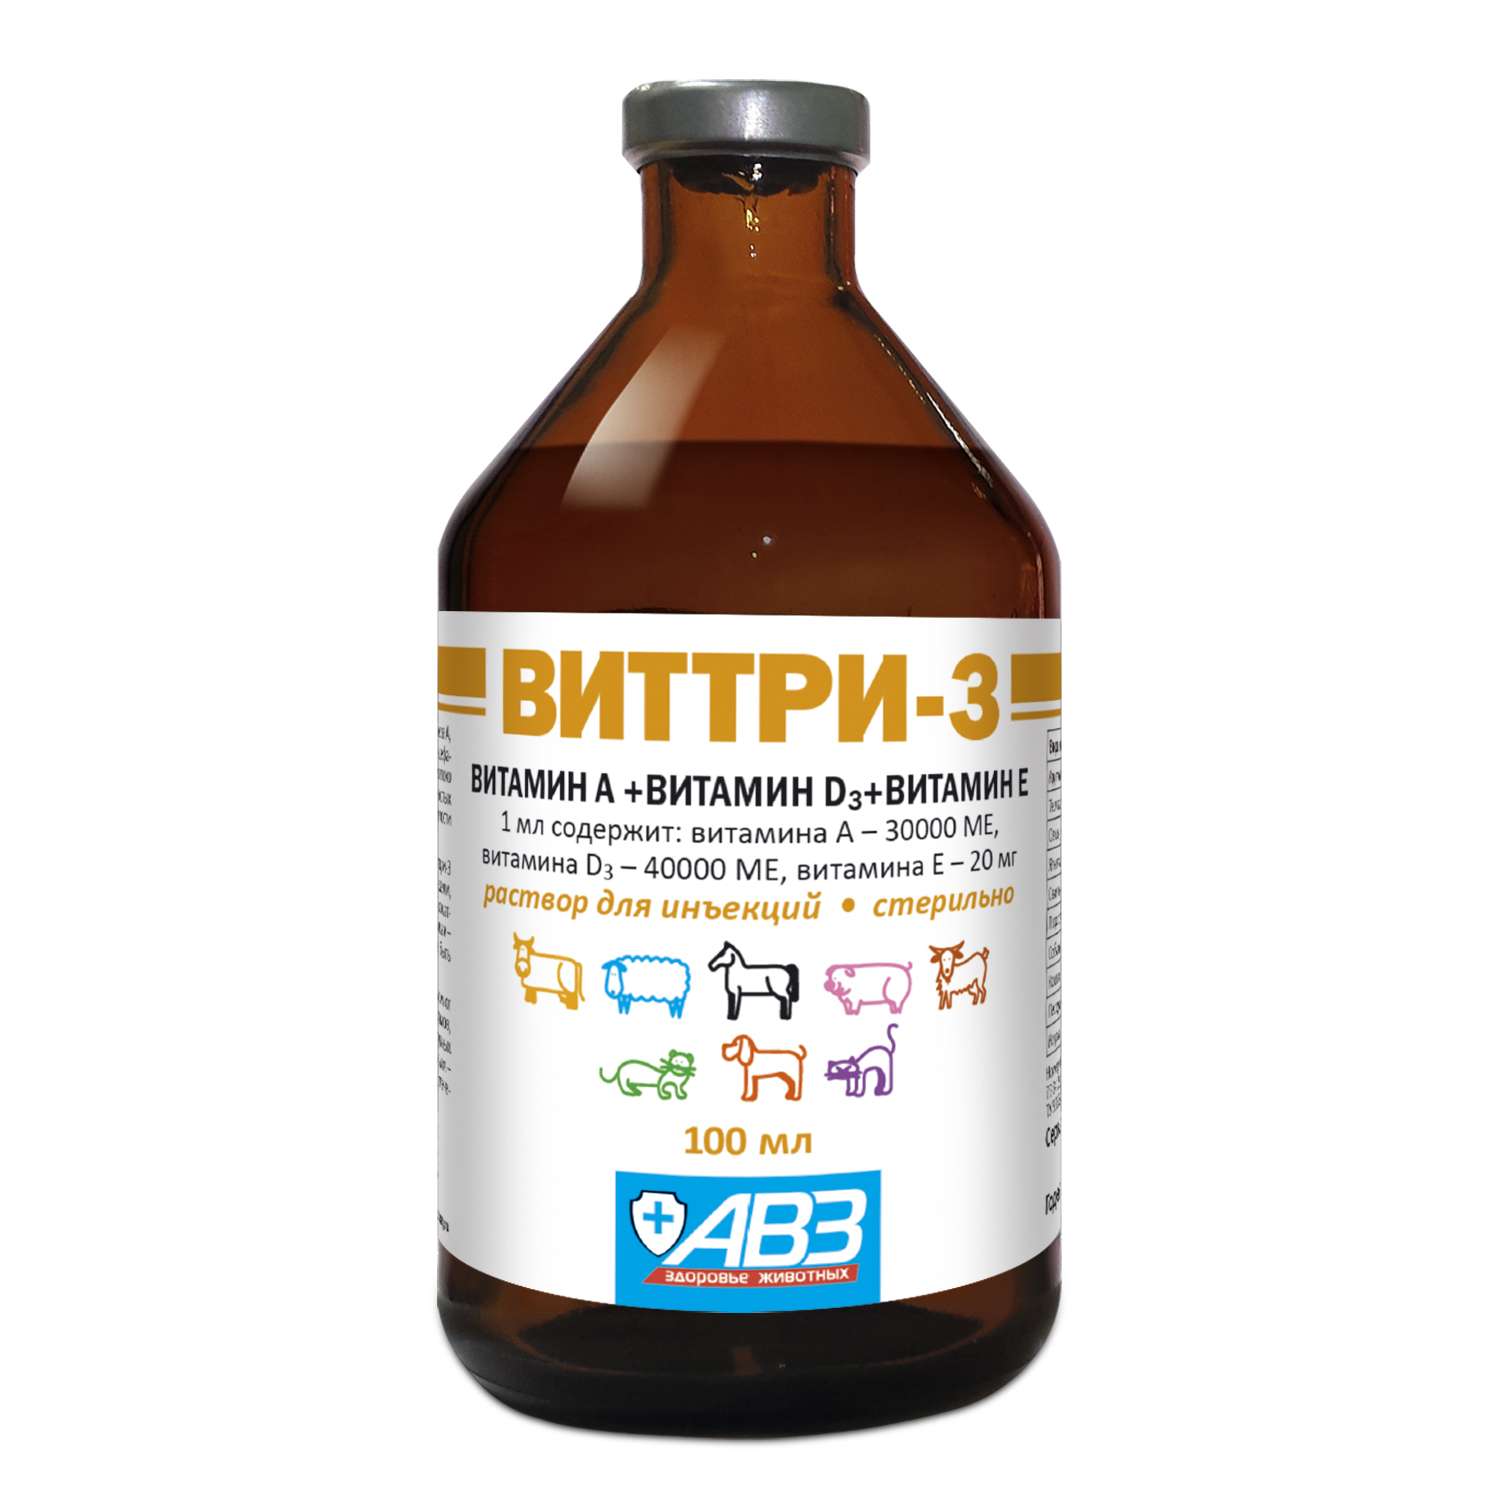 Препарат витаминный для животных АВЗ Виттри-3 100мл - фото 1